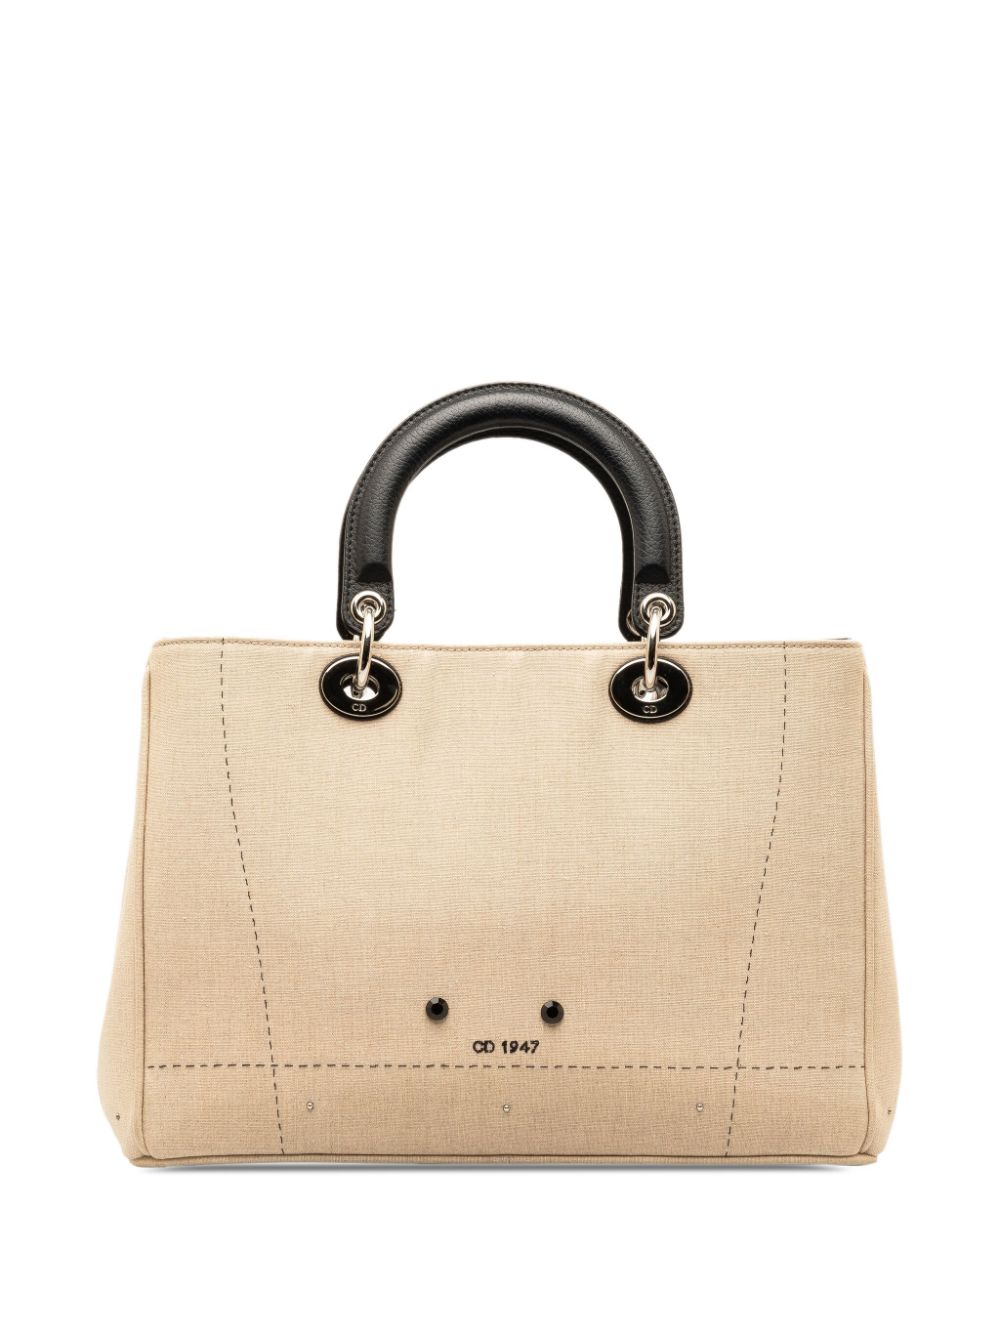 Image 2 of Christian Dior Pre-Owned 2014 Medium Diorissimo Etoile satchel